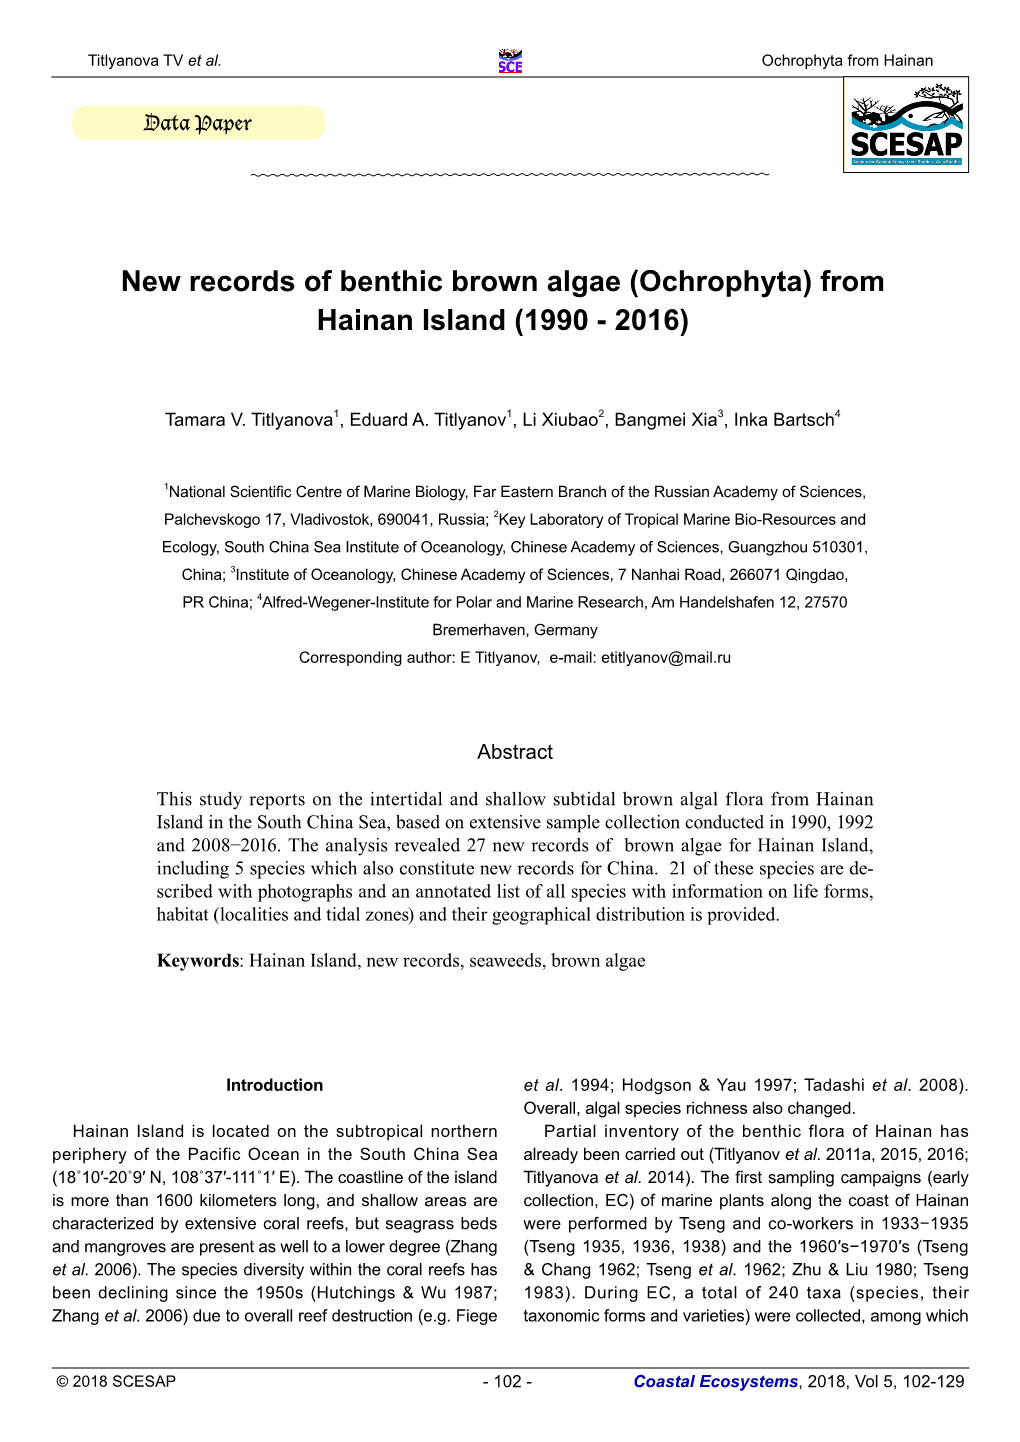 New Records of Benthic Brown Algae (Ochrophyta) from Hainan Island (1990 - 2016)